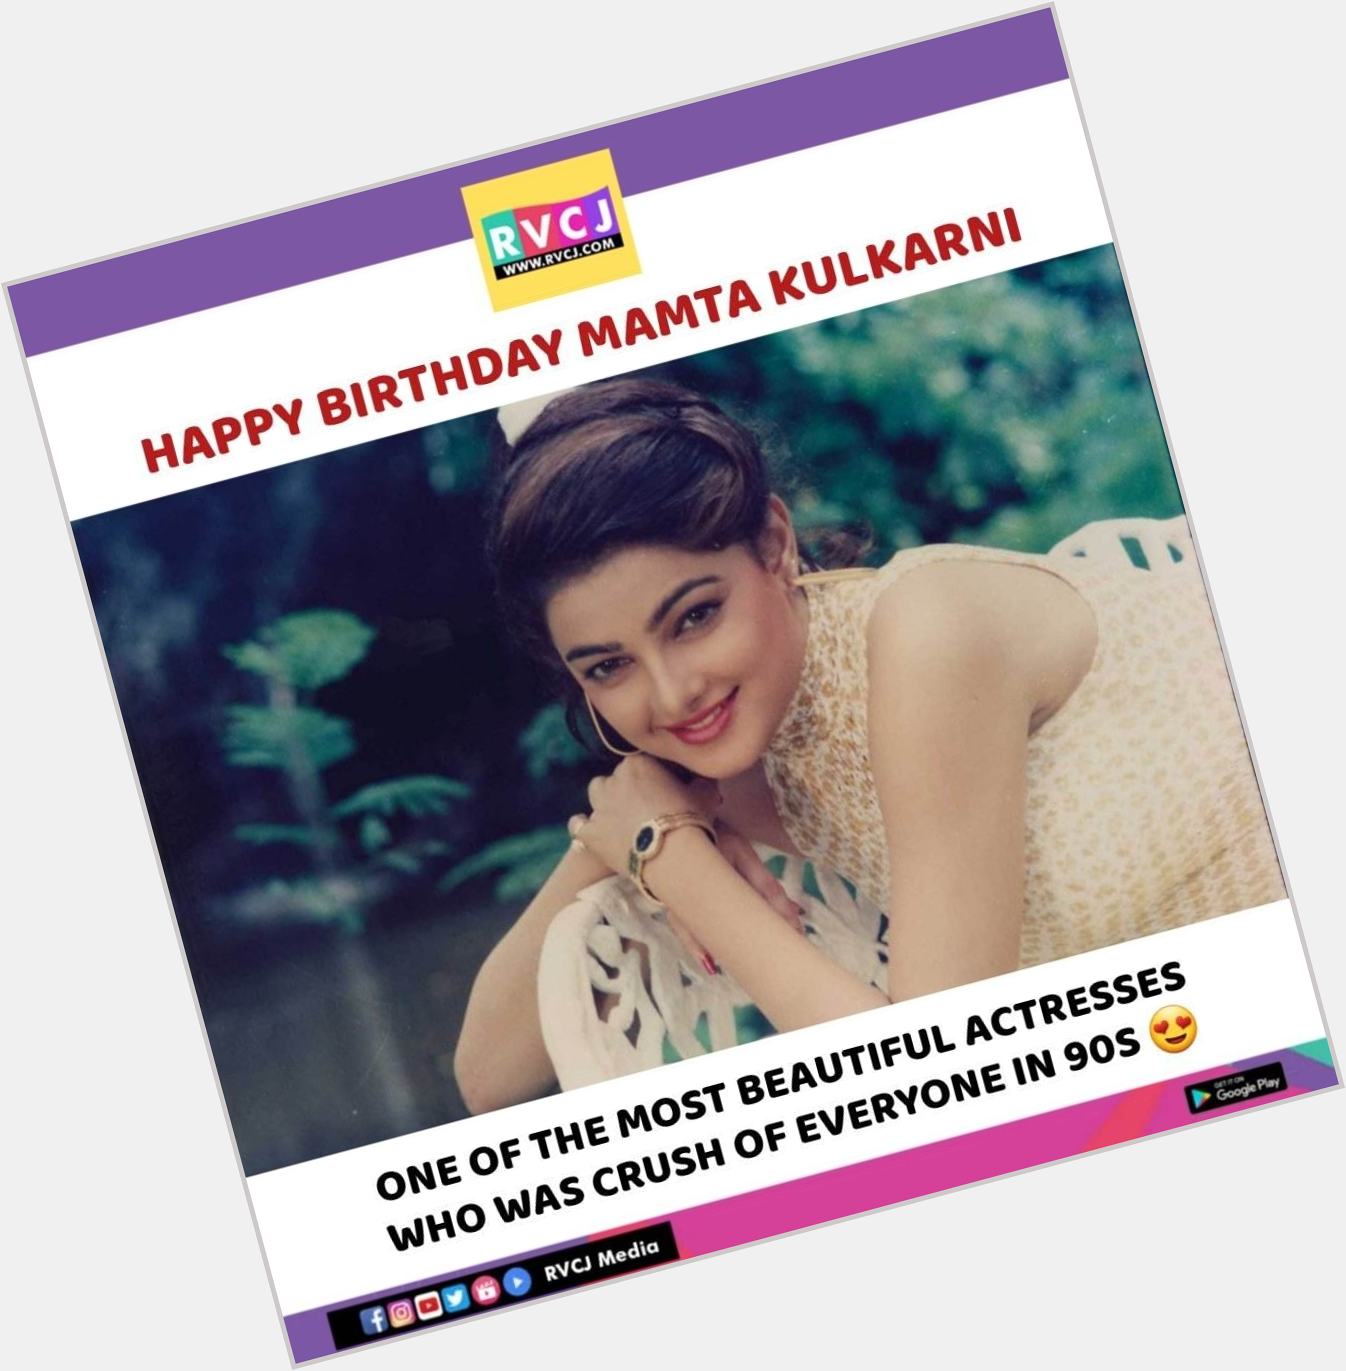 Happy Birthday Mamta Kulkarni!   